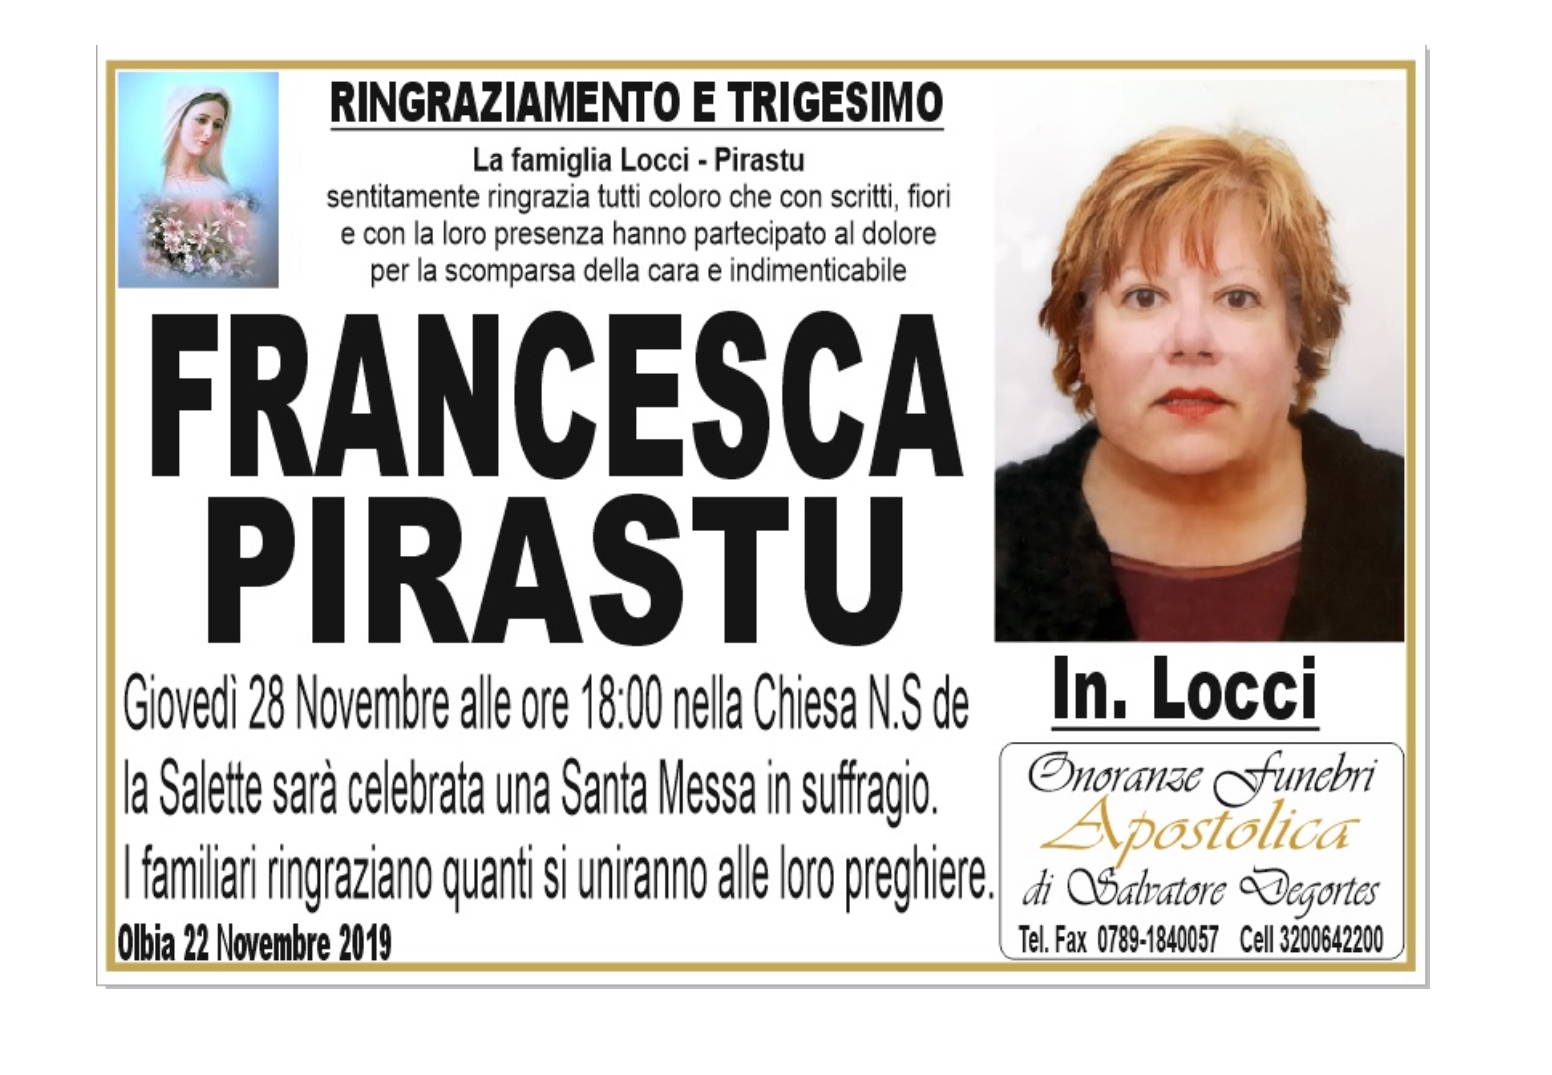 Francesca Pirastu